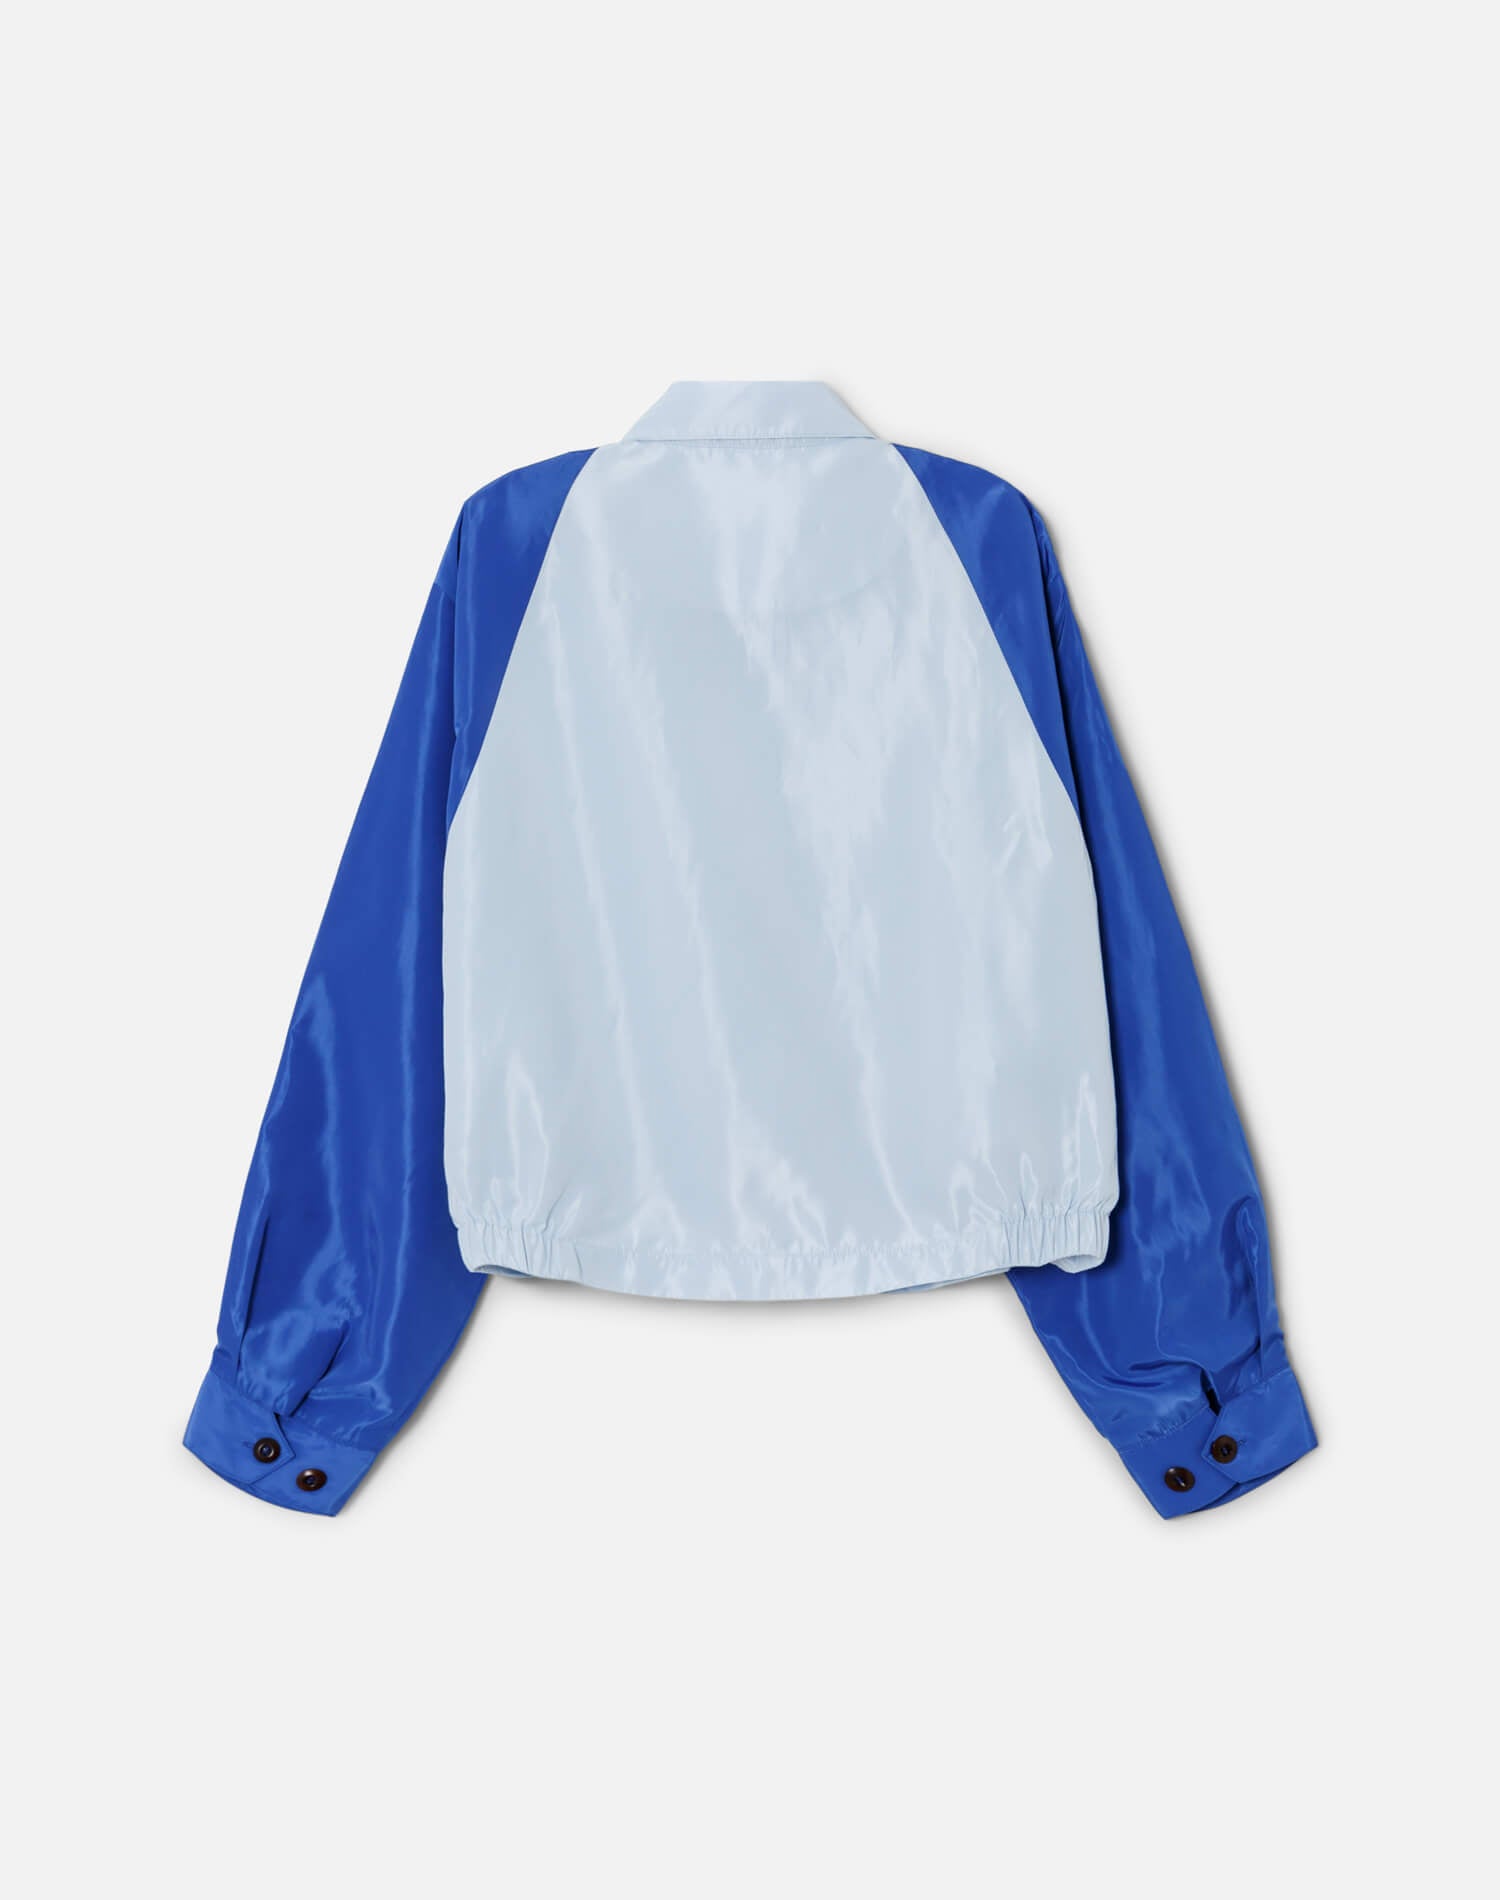 Harrington Jacket - Assorted Blue